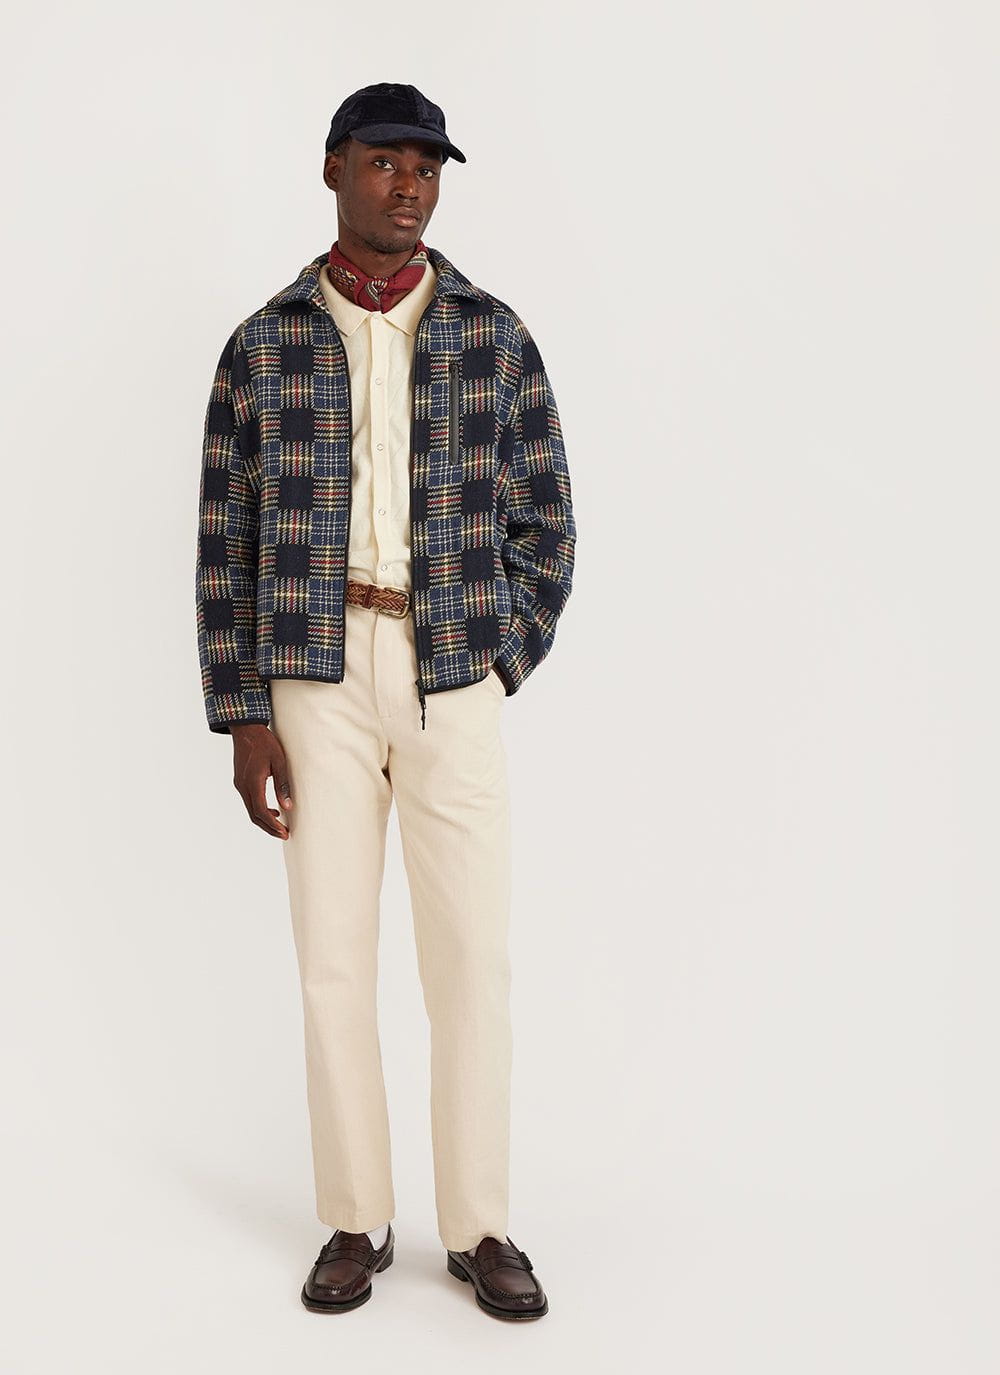 Men's Raglan Check Jacket | Wool | Navy & Percival Menswear